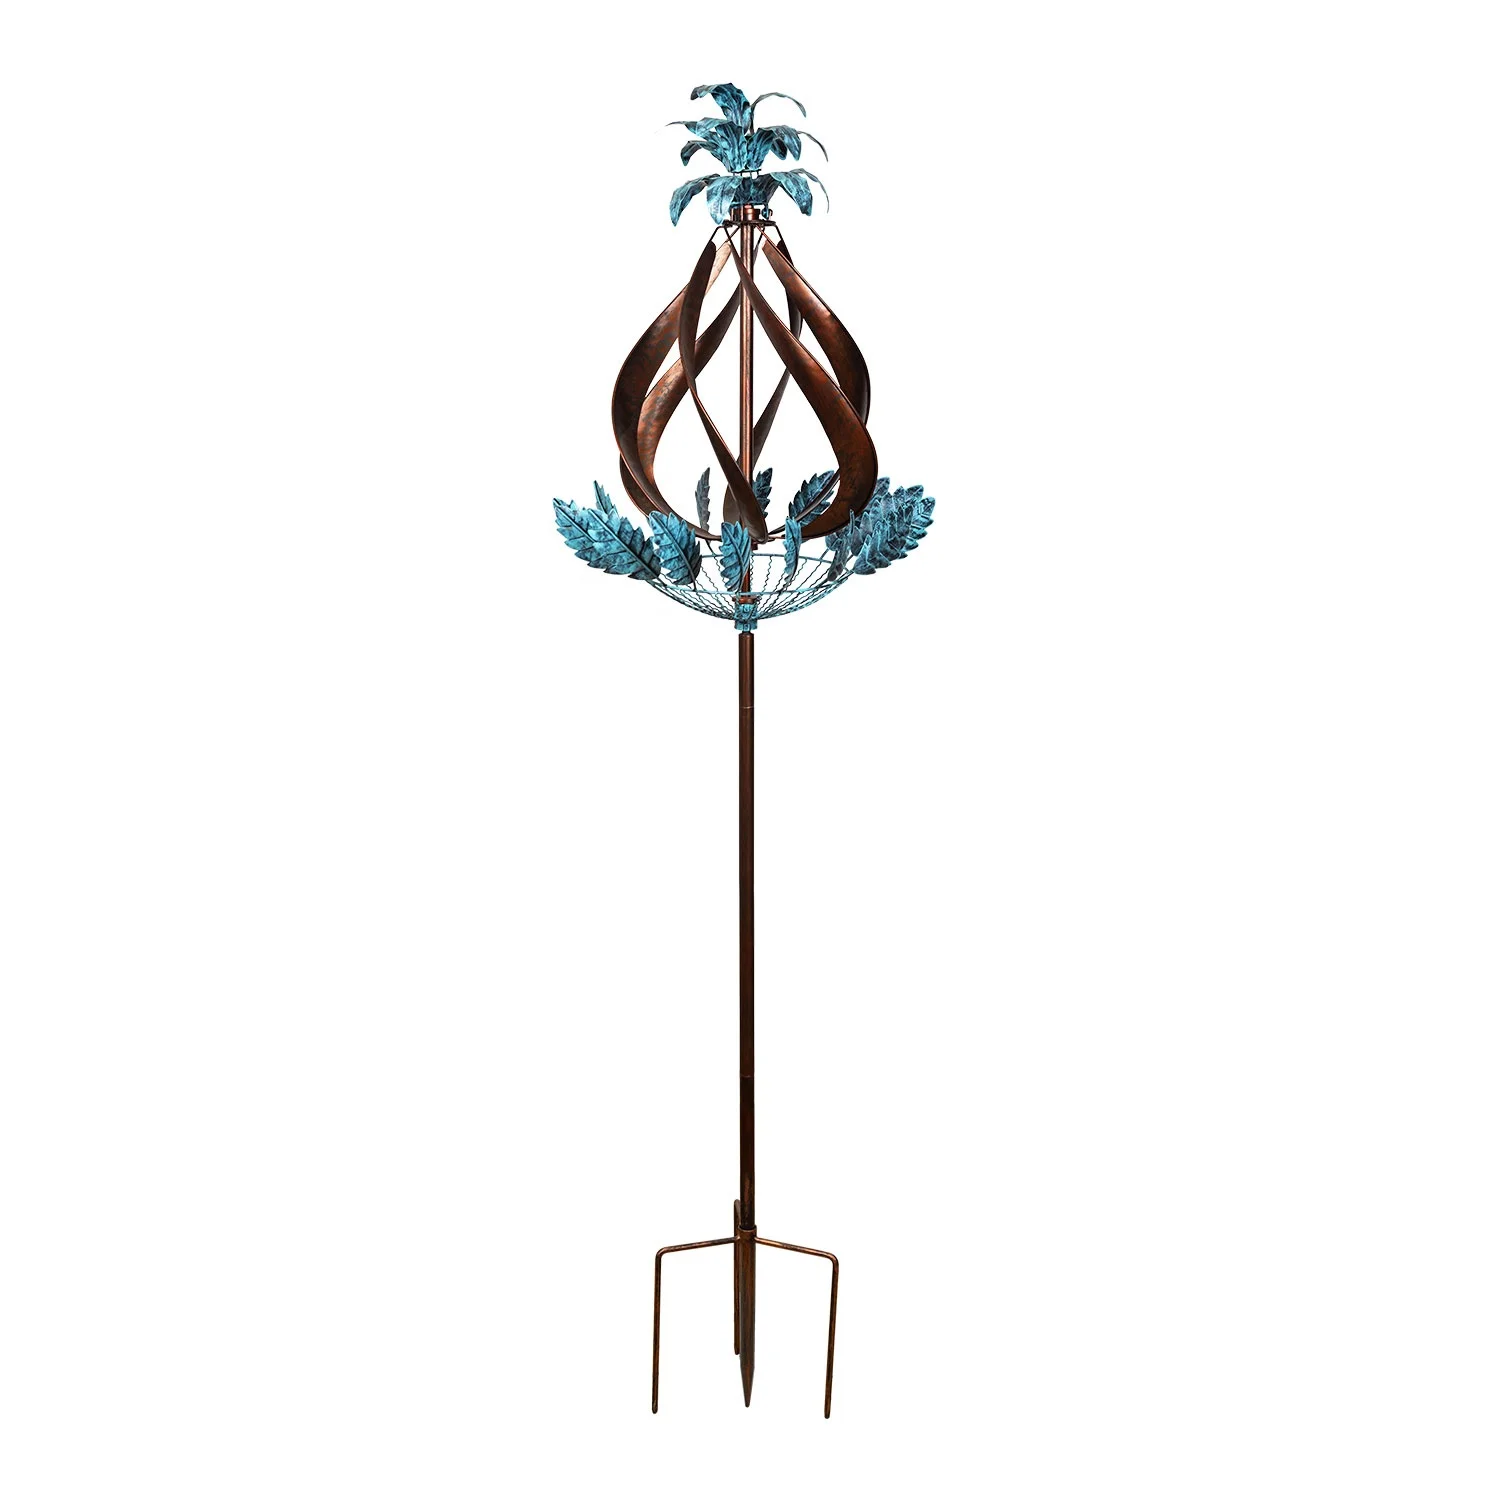 Pineapple Design Bronze Wind Spinner 3D Metal Copper Wind Spinner Garden Decor Windmill